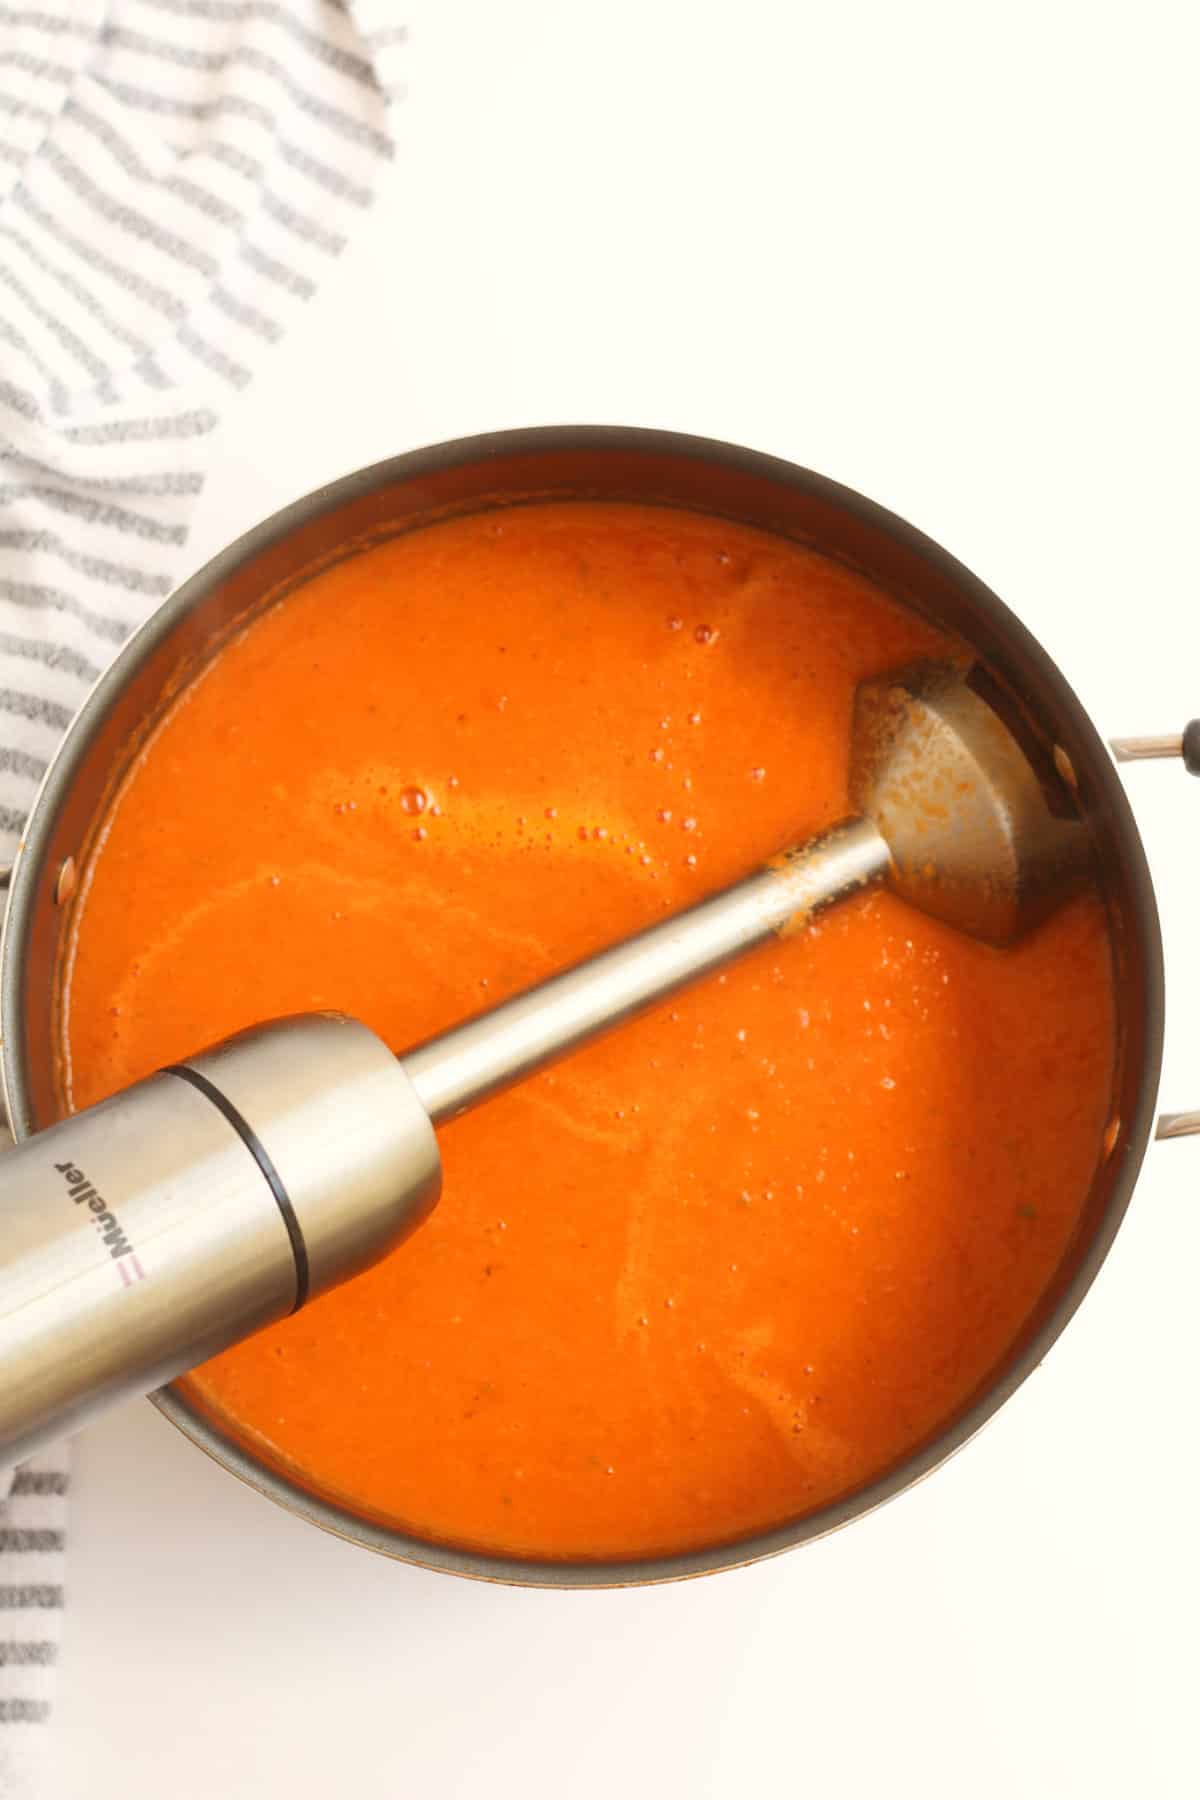 stick blender in pot of tomato soup.